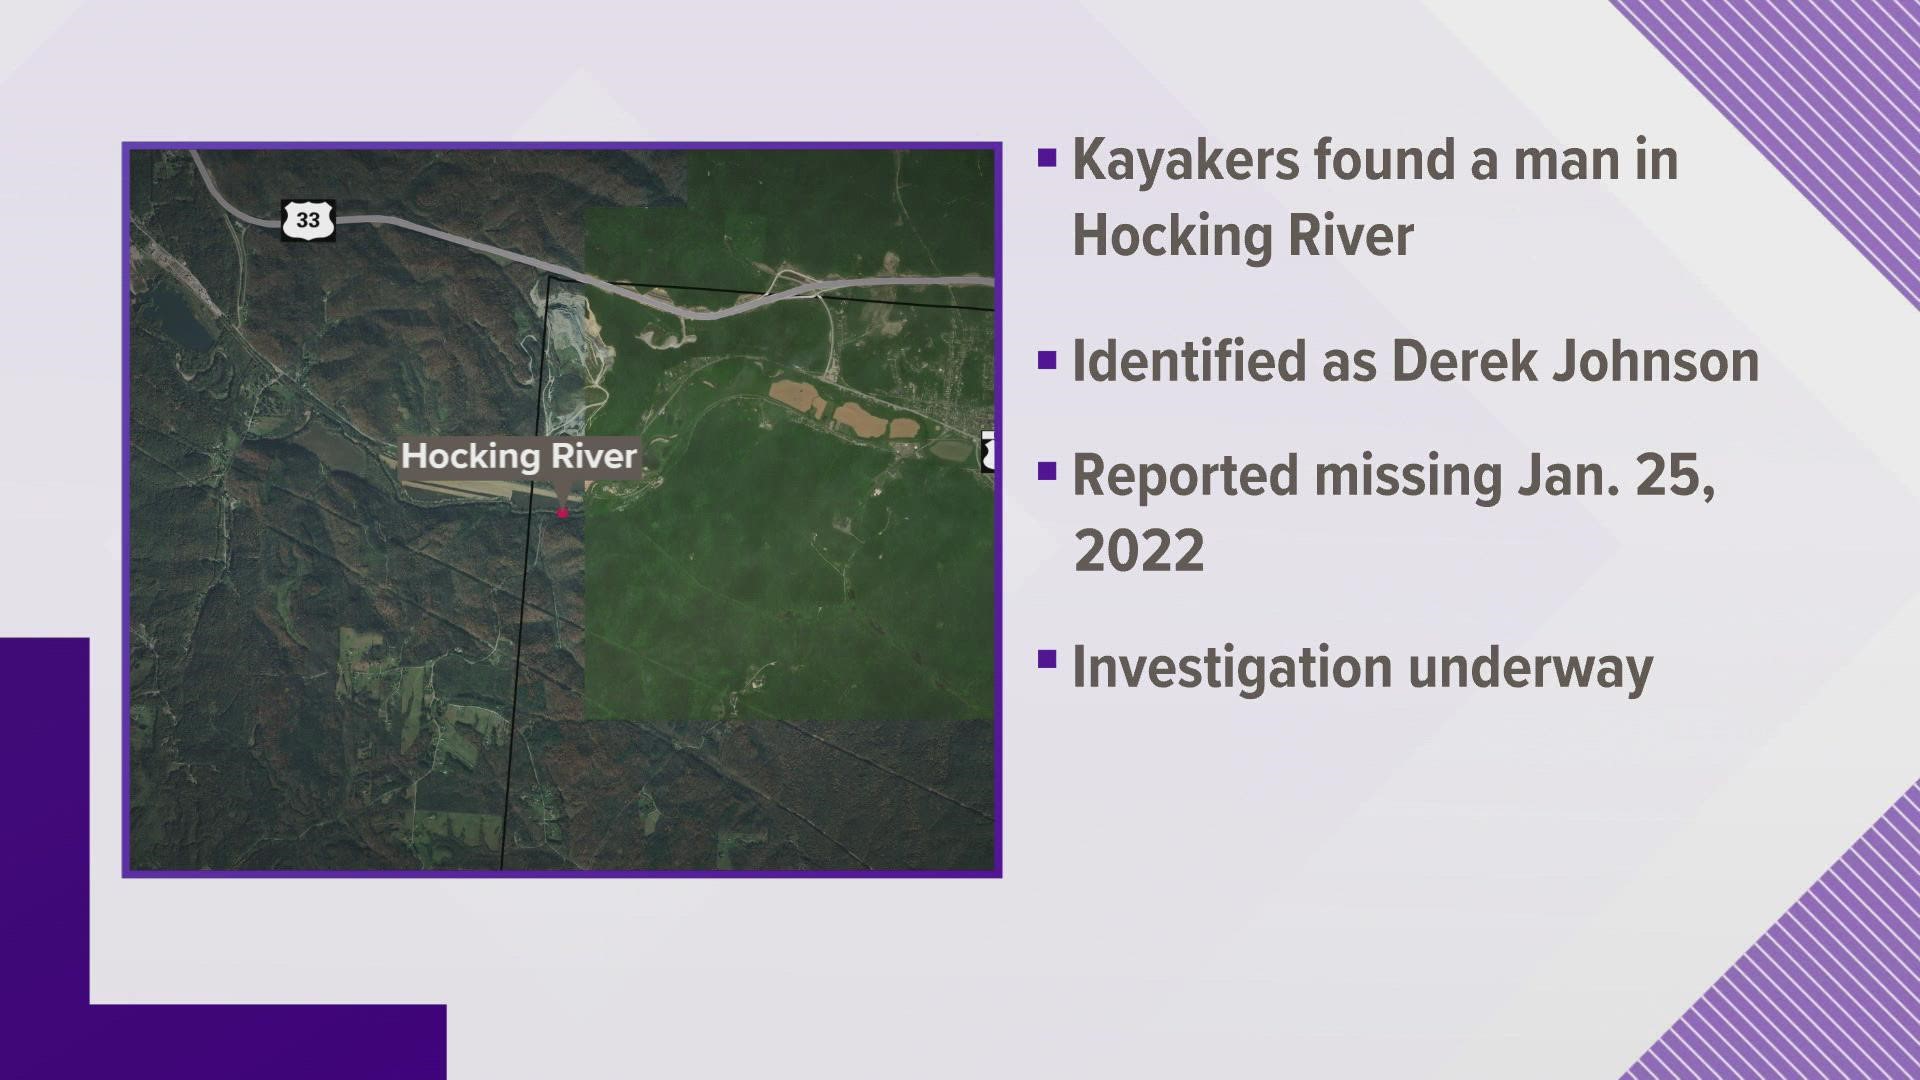 Derek Johnson was reported missing on Jan. 25.